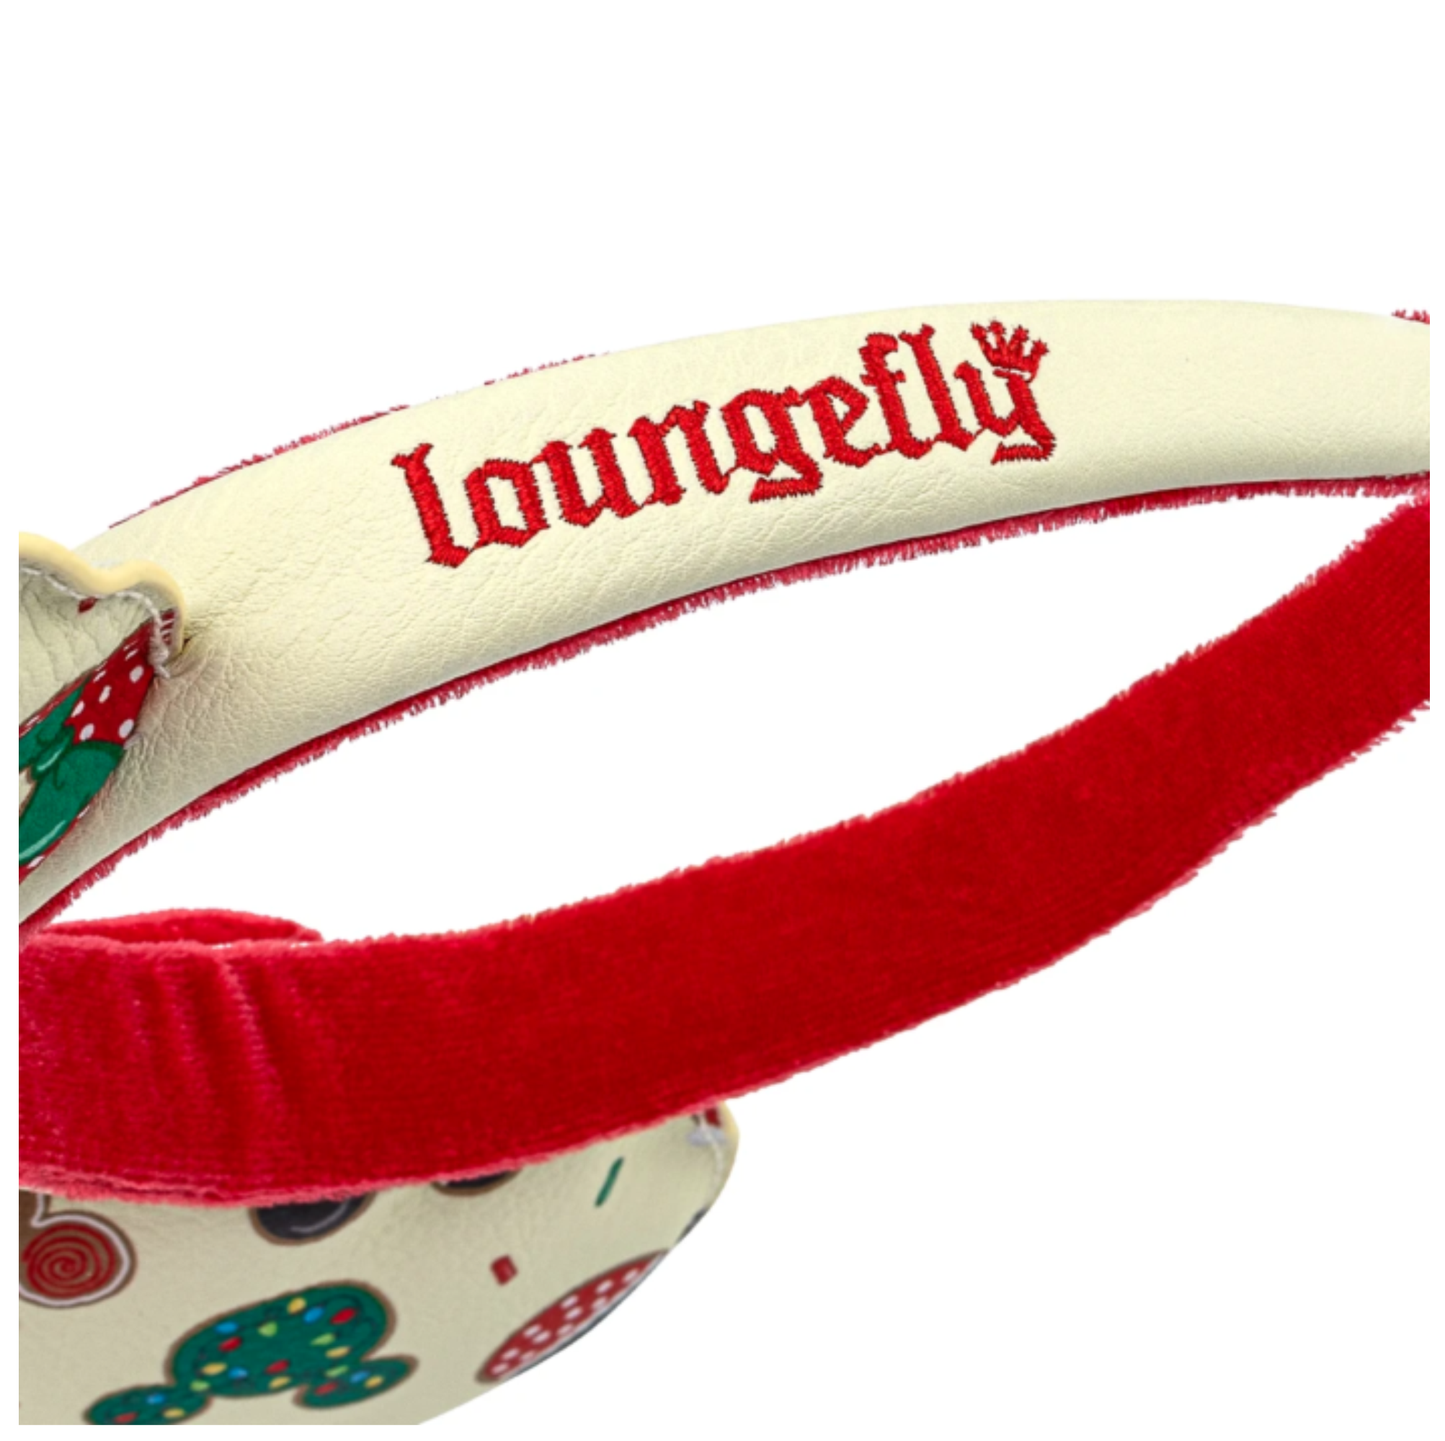 Loungefly x Disney Mickey & Minnie Christmas Cookies Ears Headband